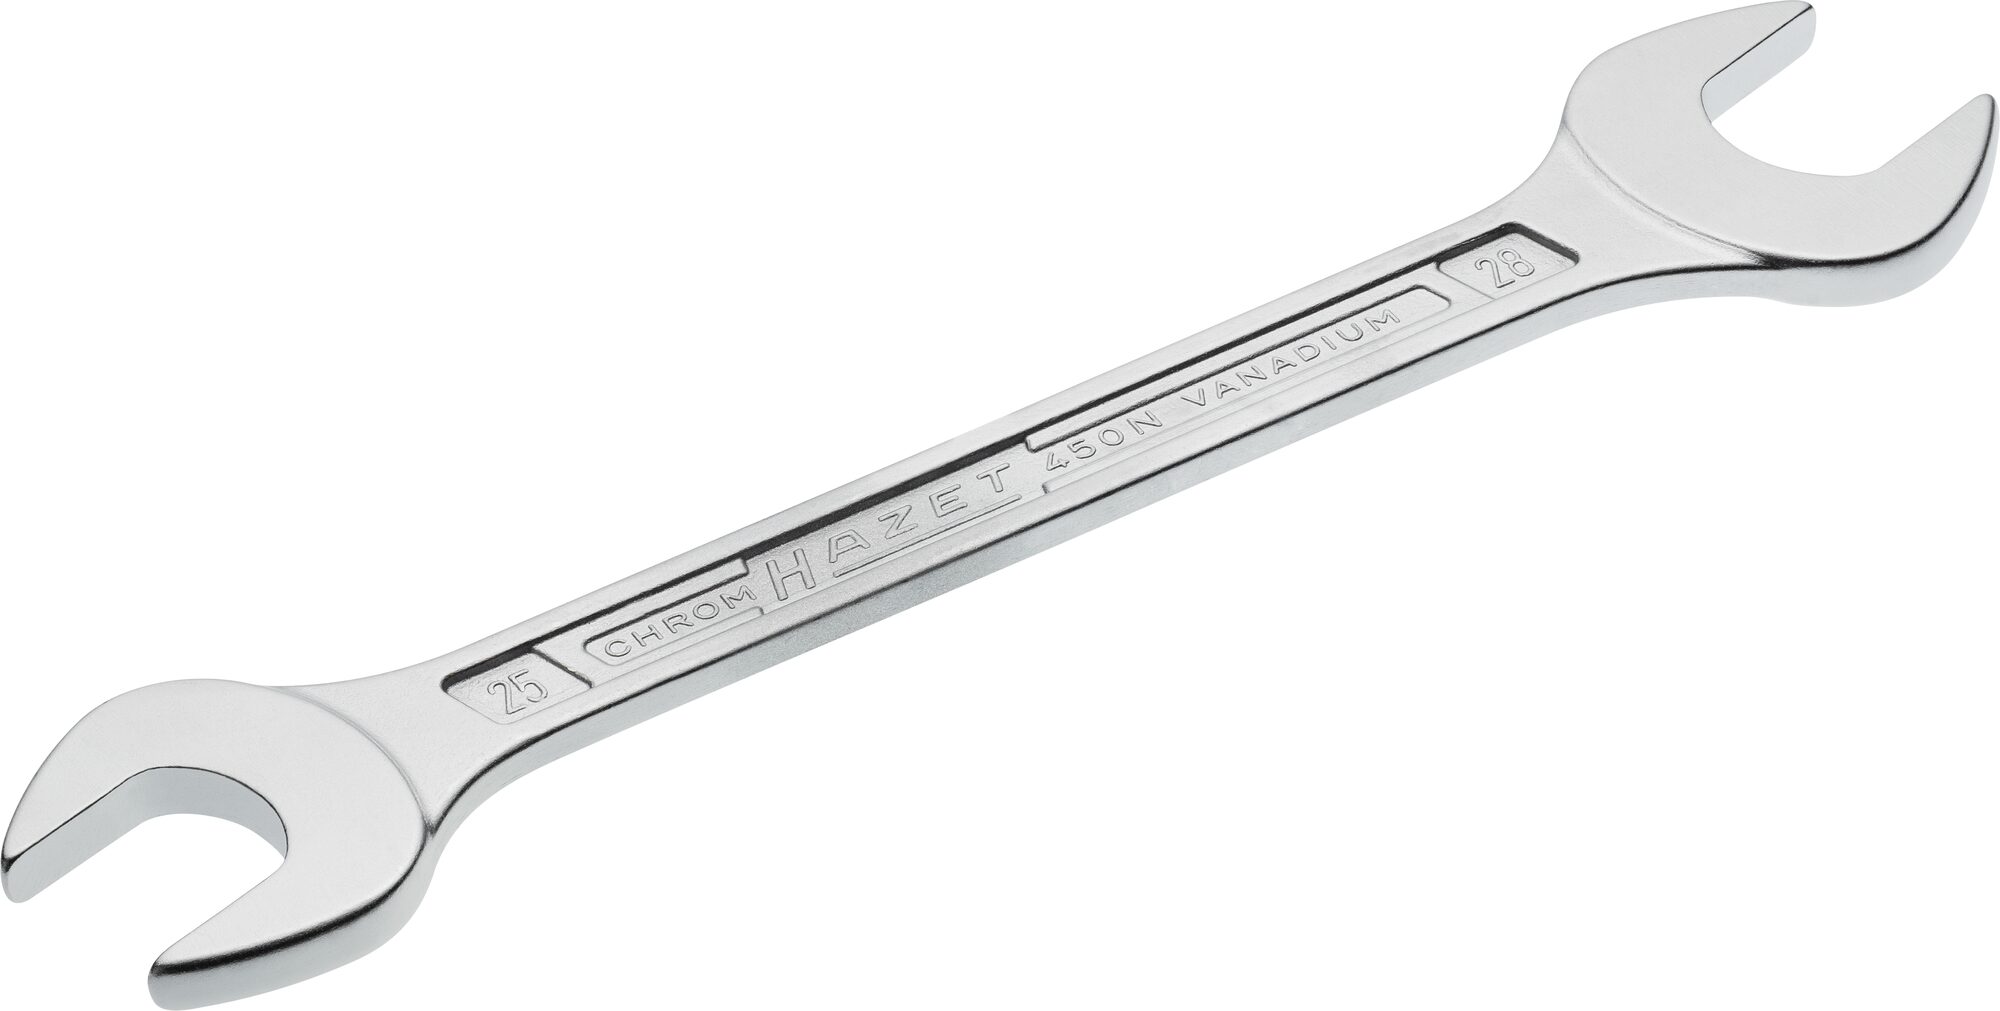 HAZET Doppel-Maulschlüssel 450N-25X28 · Außen Sechskant Profil · 25 x 28 mm